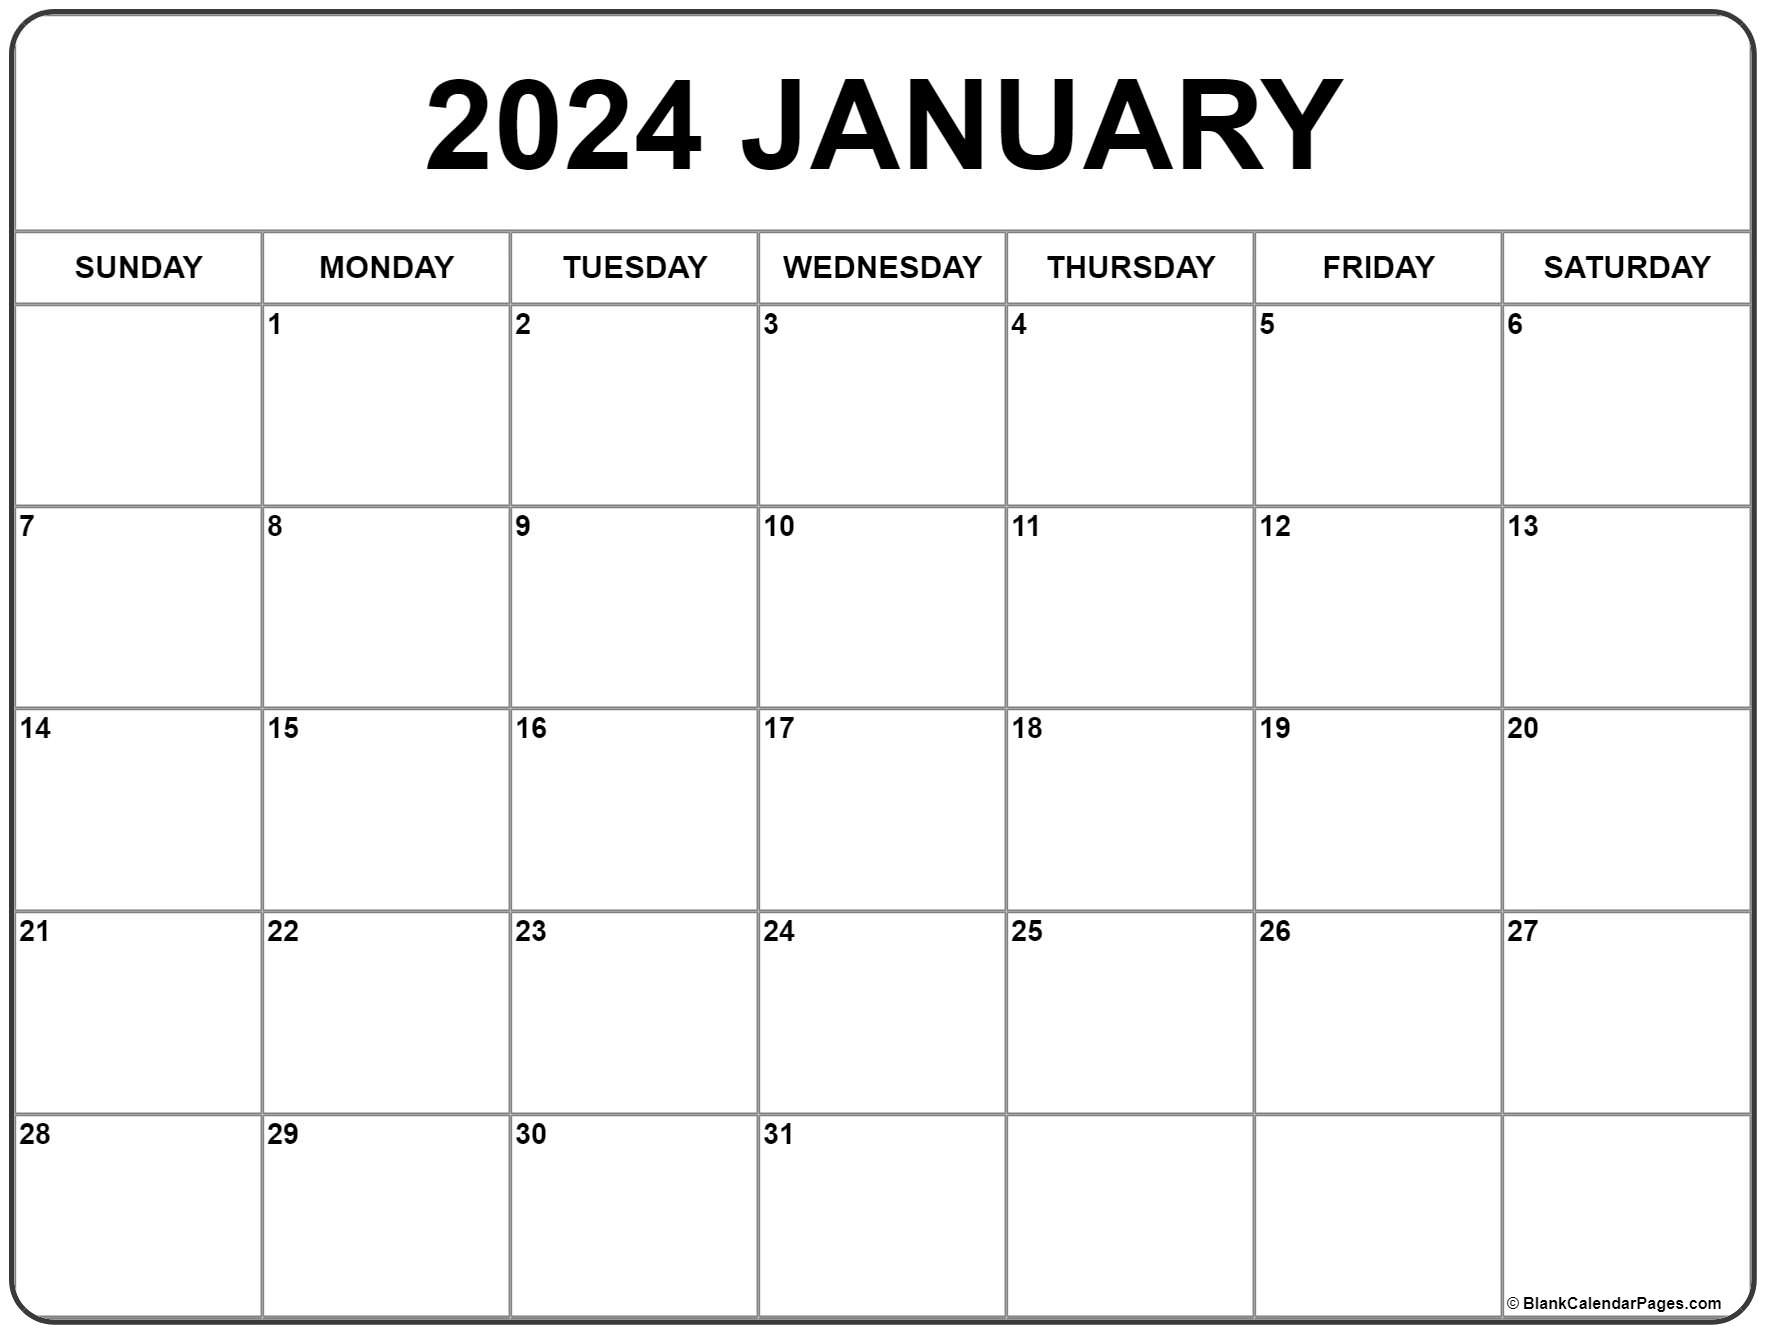 January 2024 Calendar | Free Printable Calendar for Free Printable January 2024 Monthly Calendar